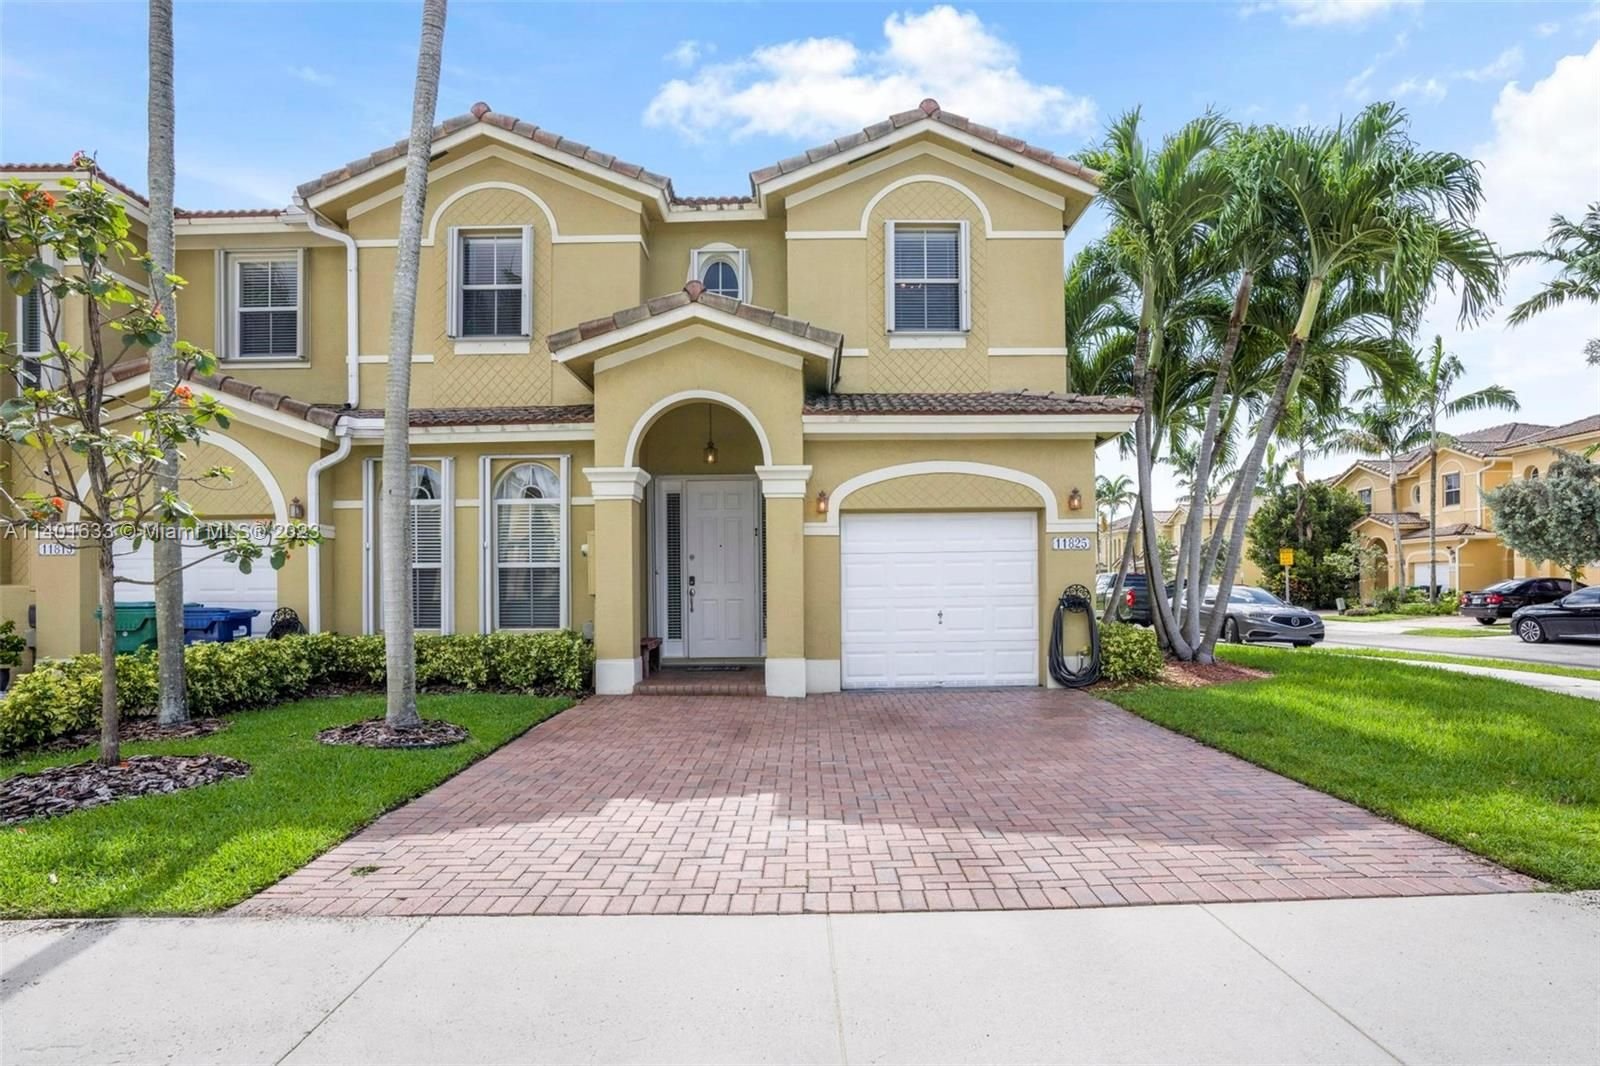 Real estate property located at 11825 138th Ave, Miami-Dade County, Miami, FL